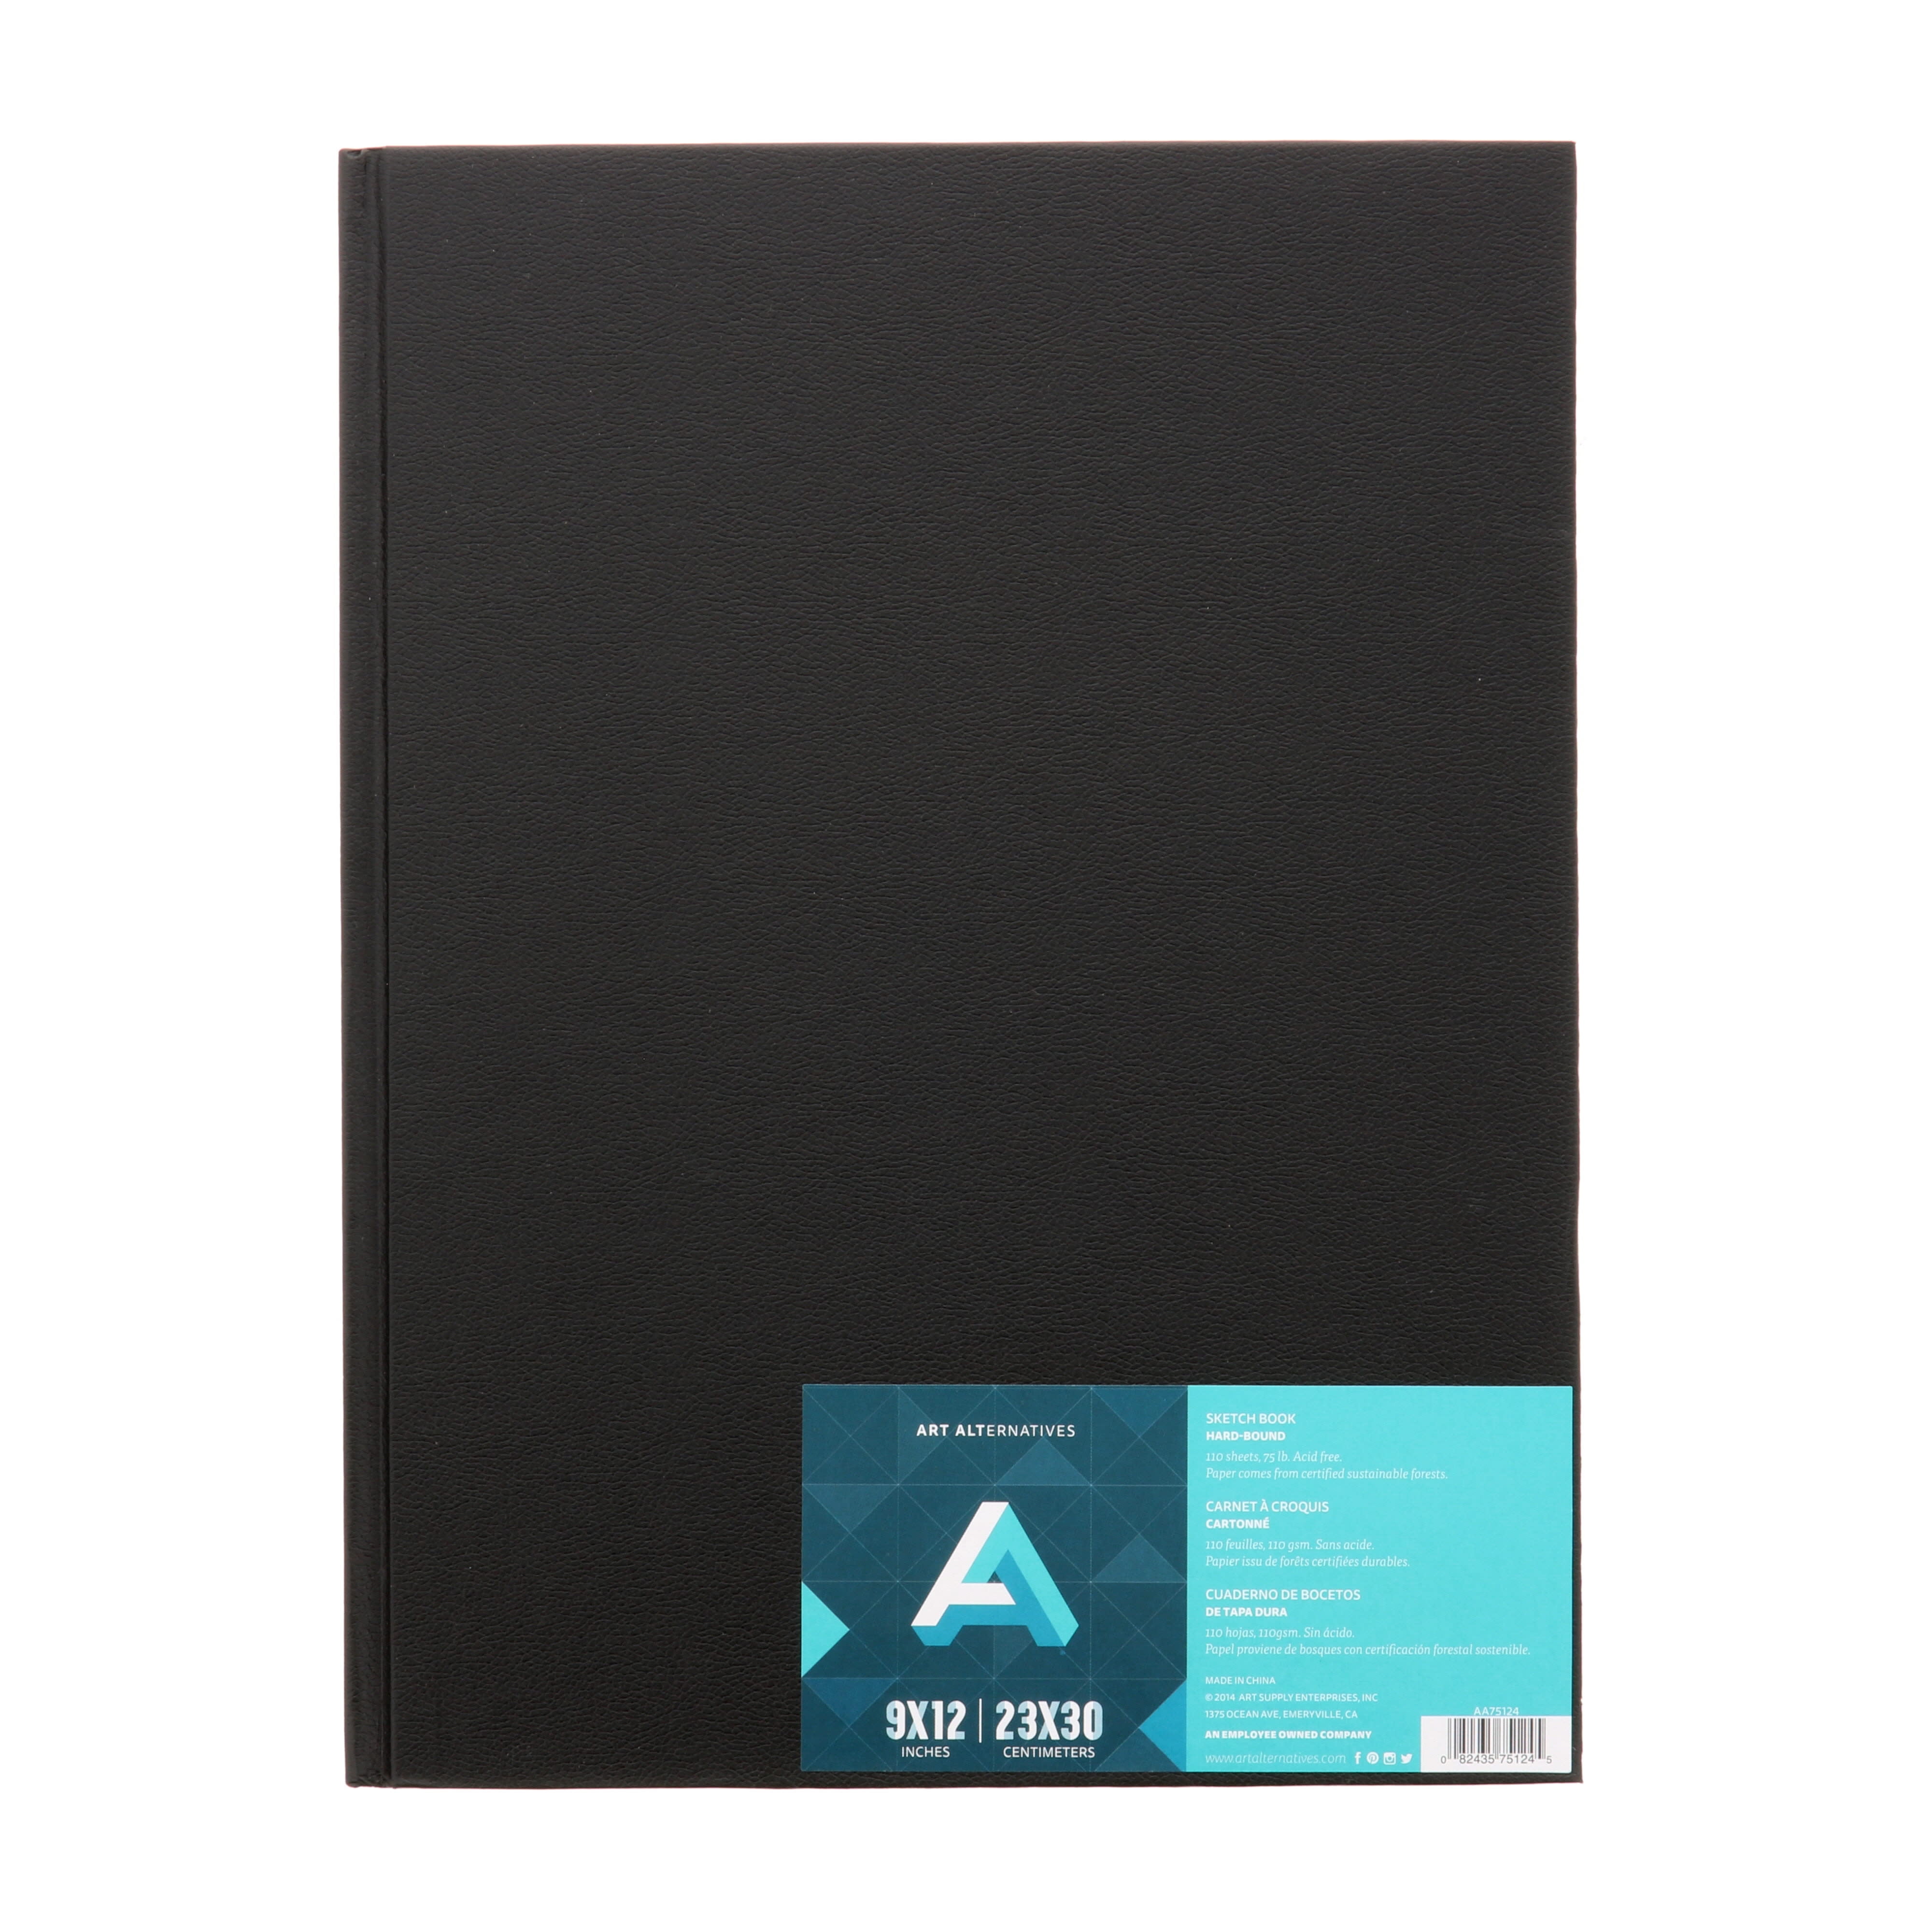 XL Mix Media ROUGH Sketchbook - 9 x 12 – NSCAD Art Supply Store